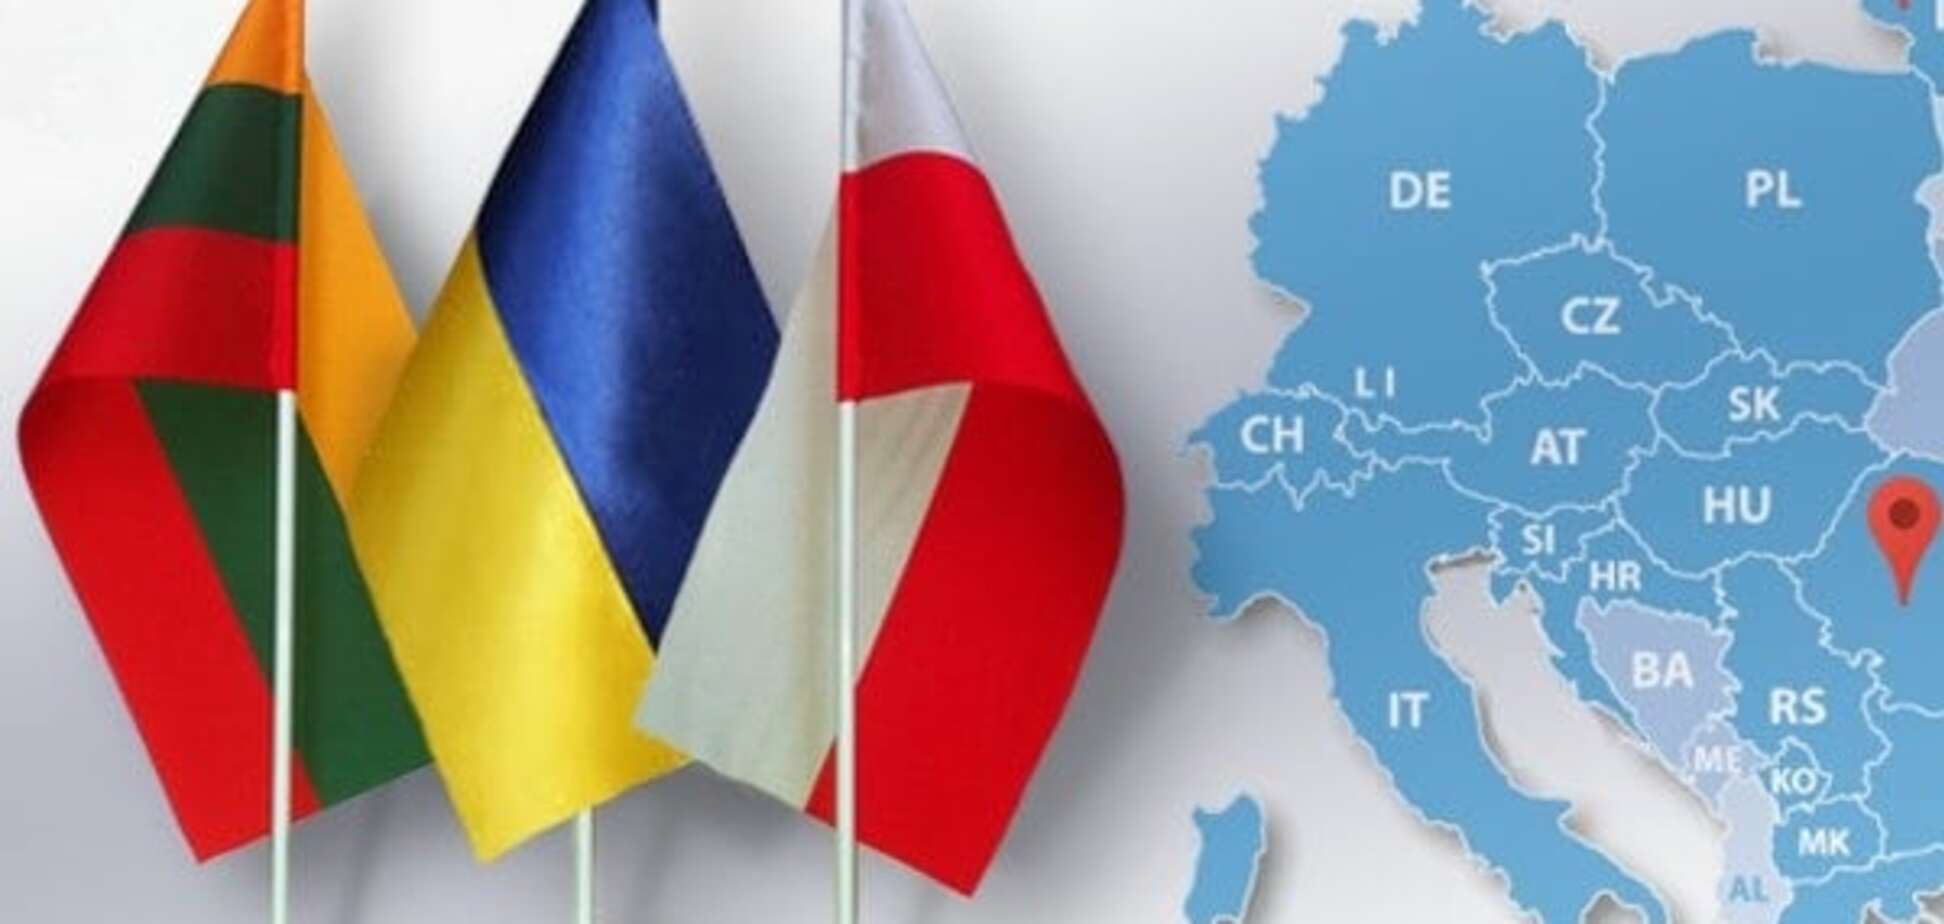 Прапори Литви, України, Польщі